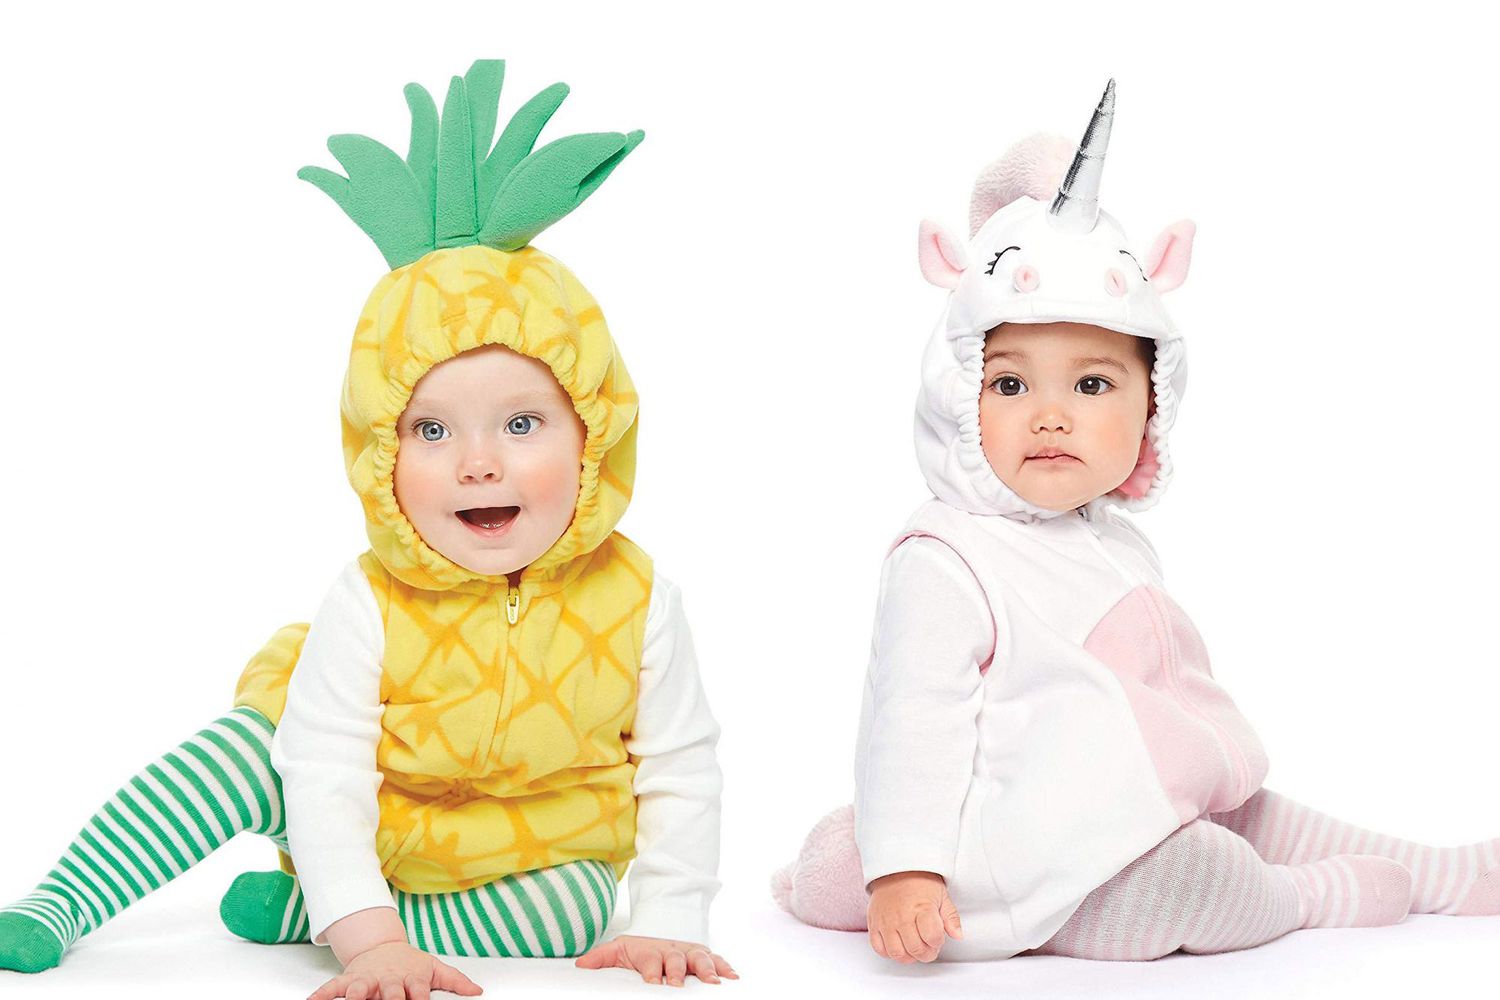 Merqwadd Unisex Toddler Baby Halloween Avocado Costume Cute Velvet Costumes Outfits